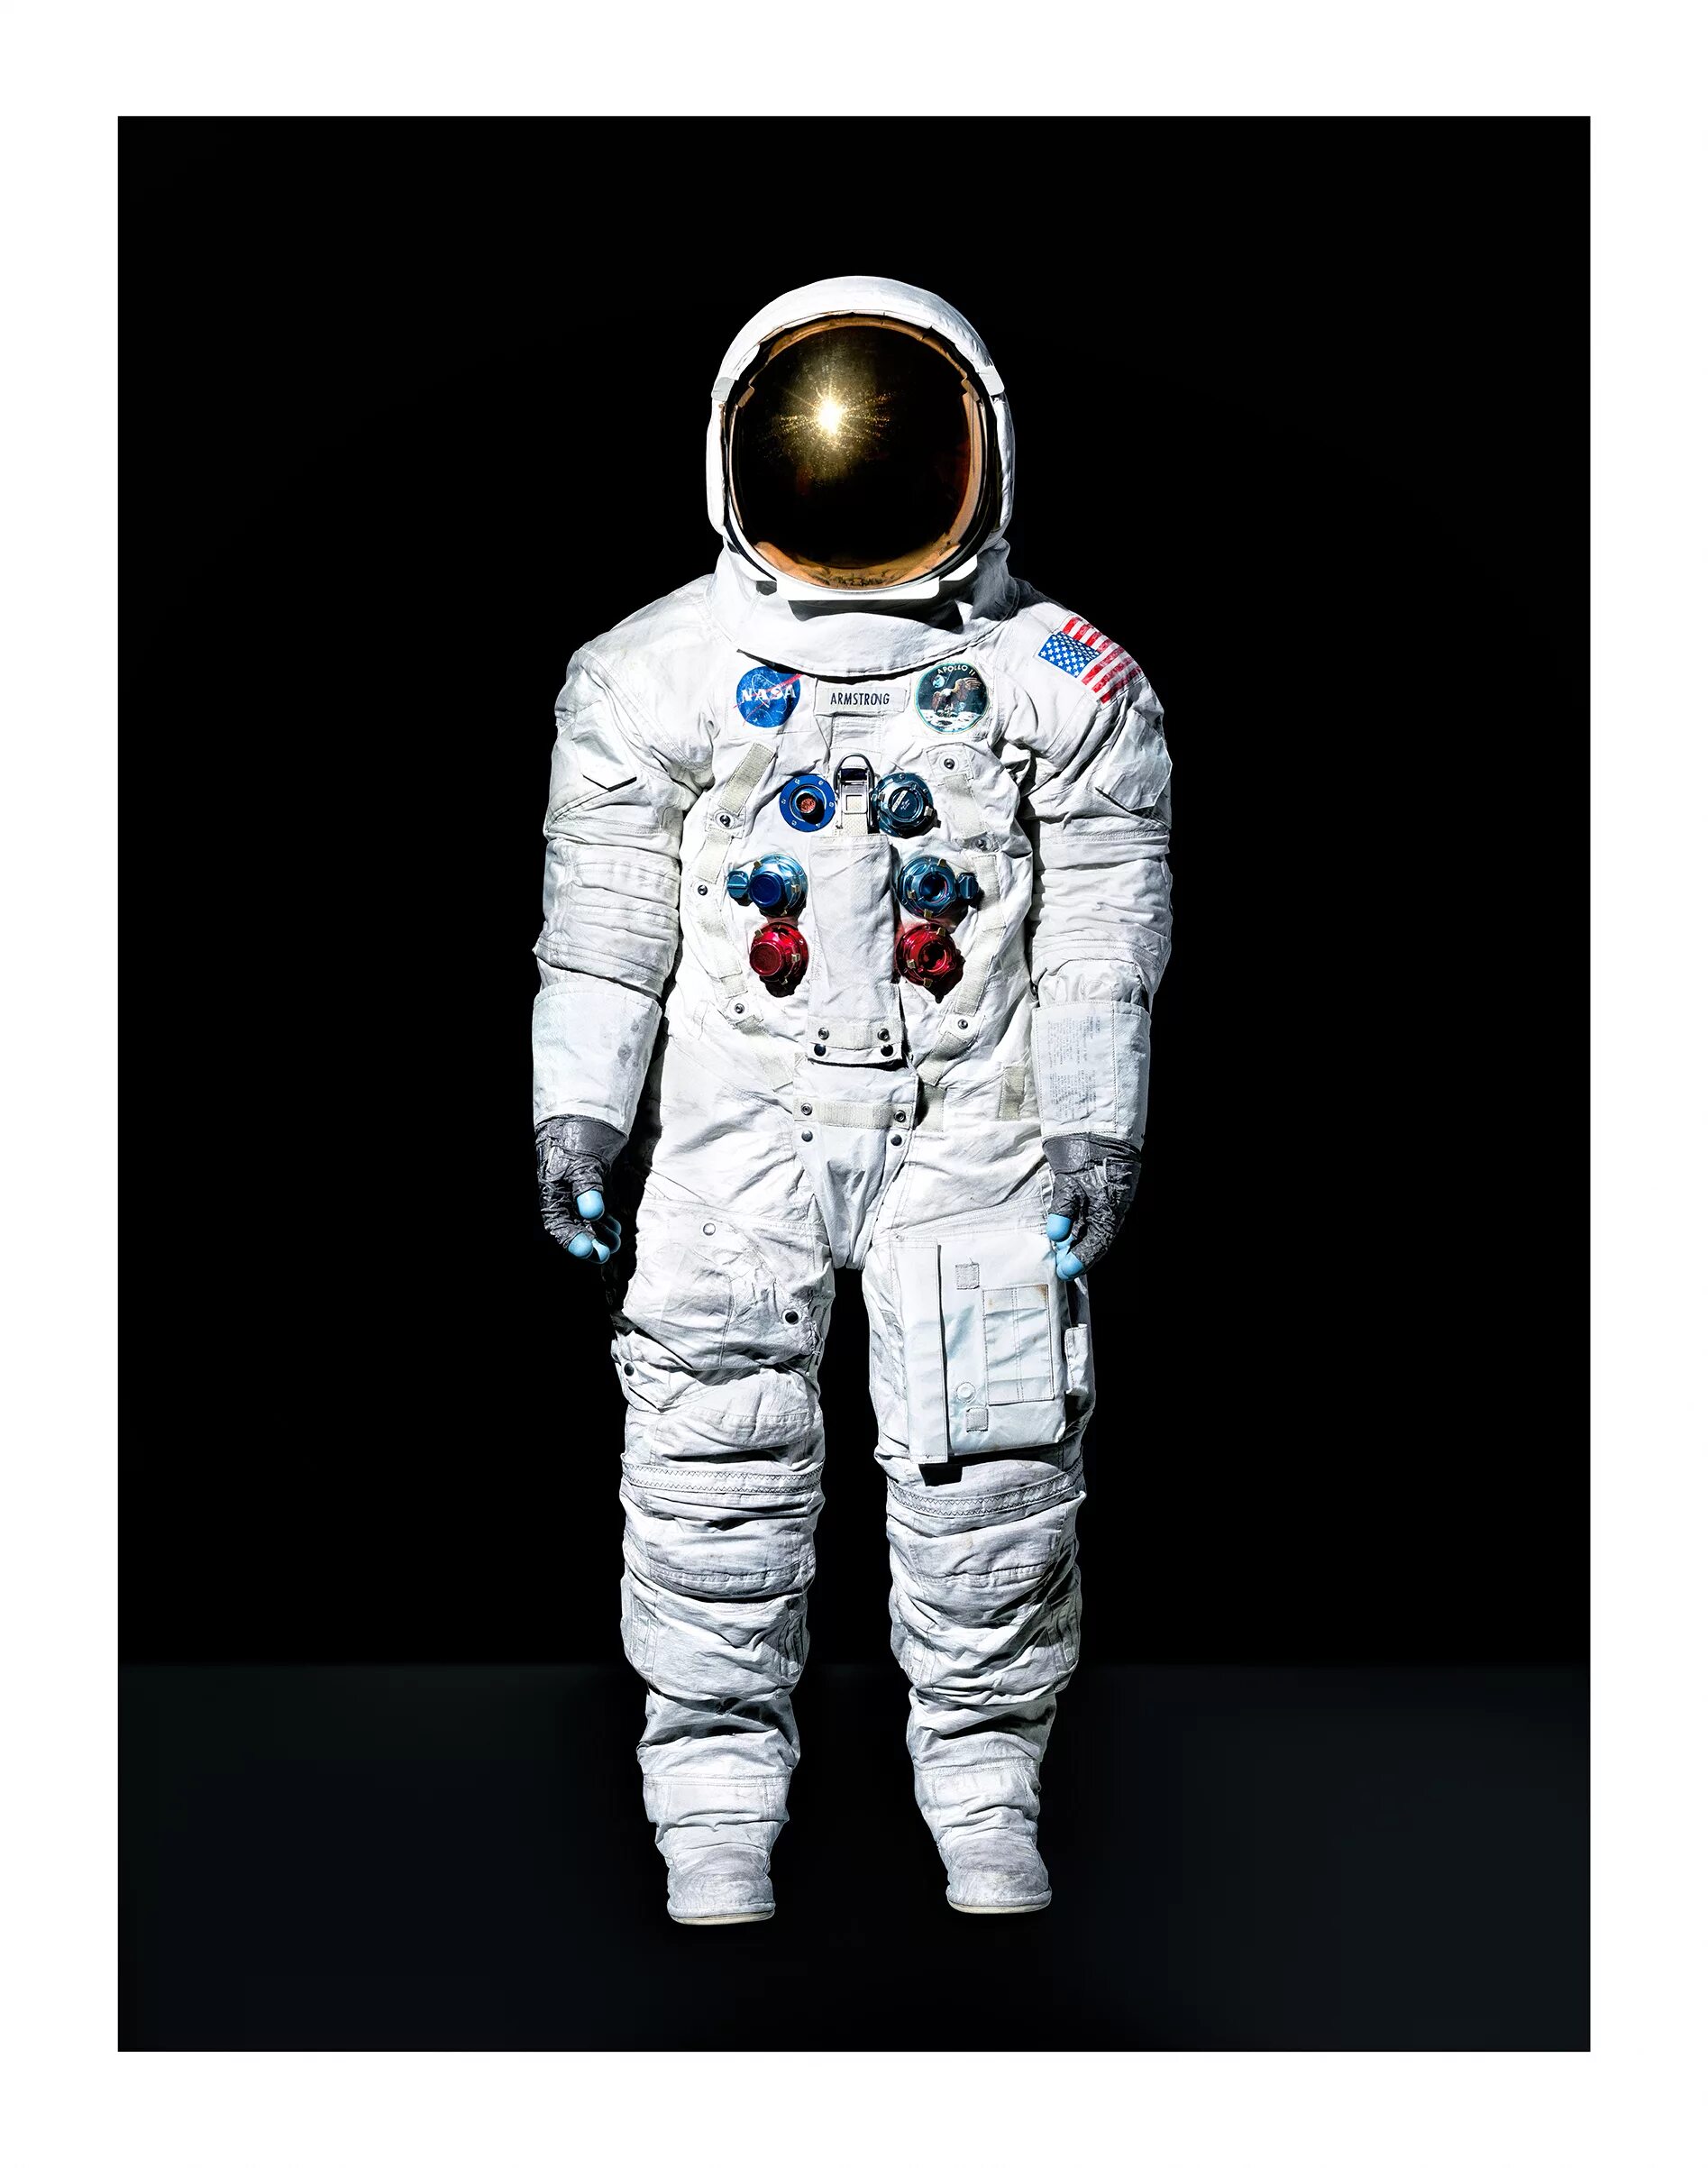 Скафандр картинка. Скафандр Аполлон 11. Скафандр Космонавта. Скафандр Космонавта NASA. Скафандр Орлан.